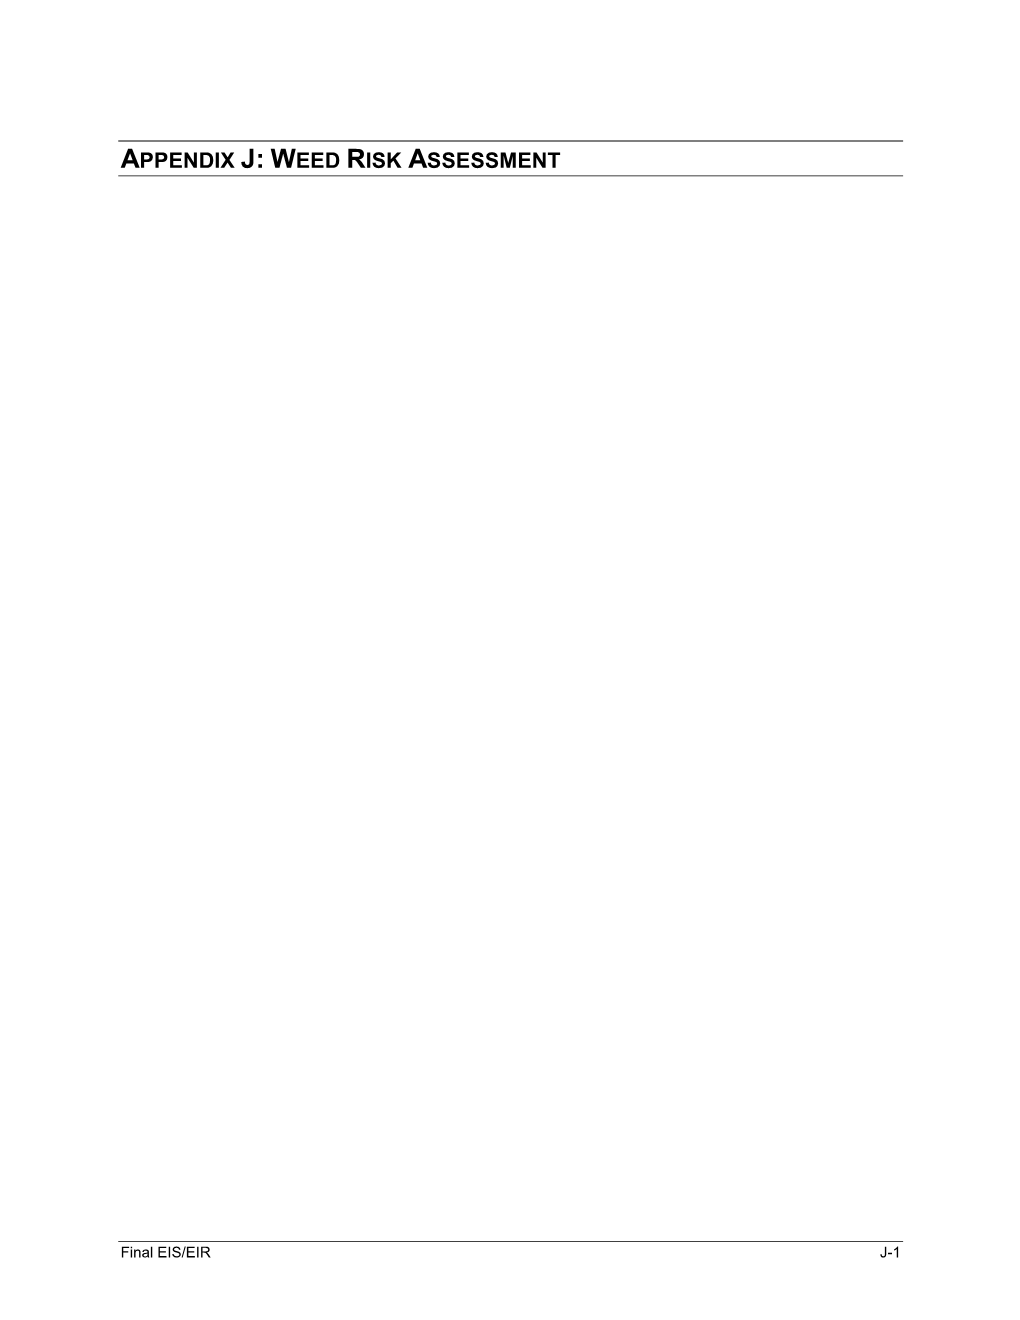 BRRTP Final EIS/EIR Appendix J: Weed Risk Assessment